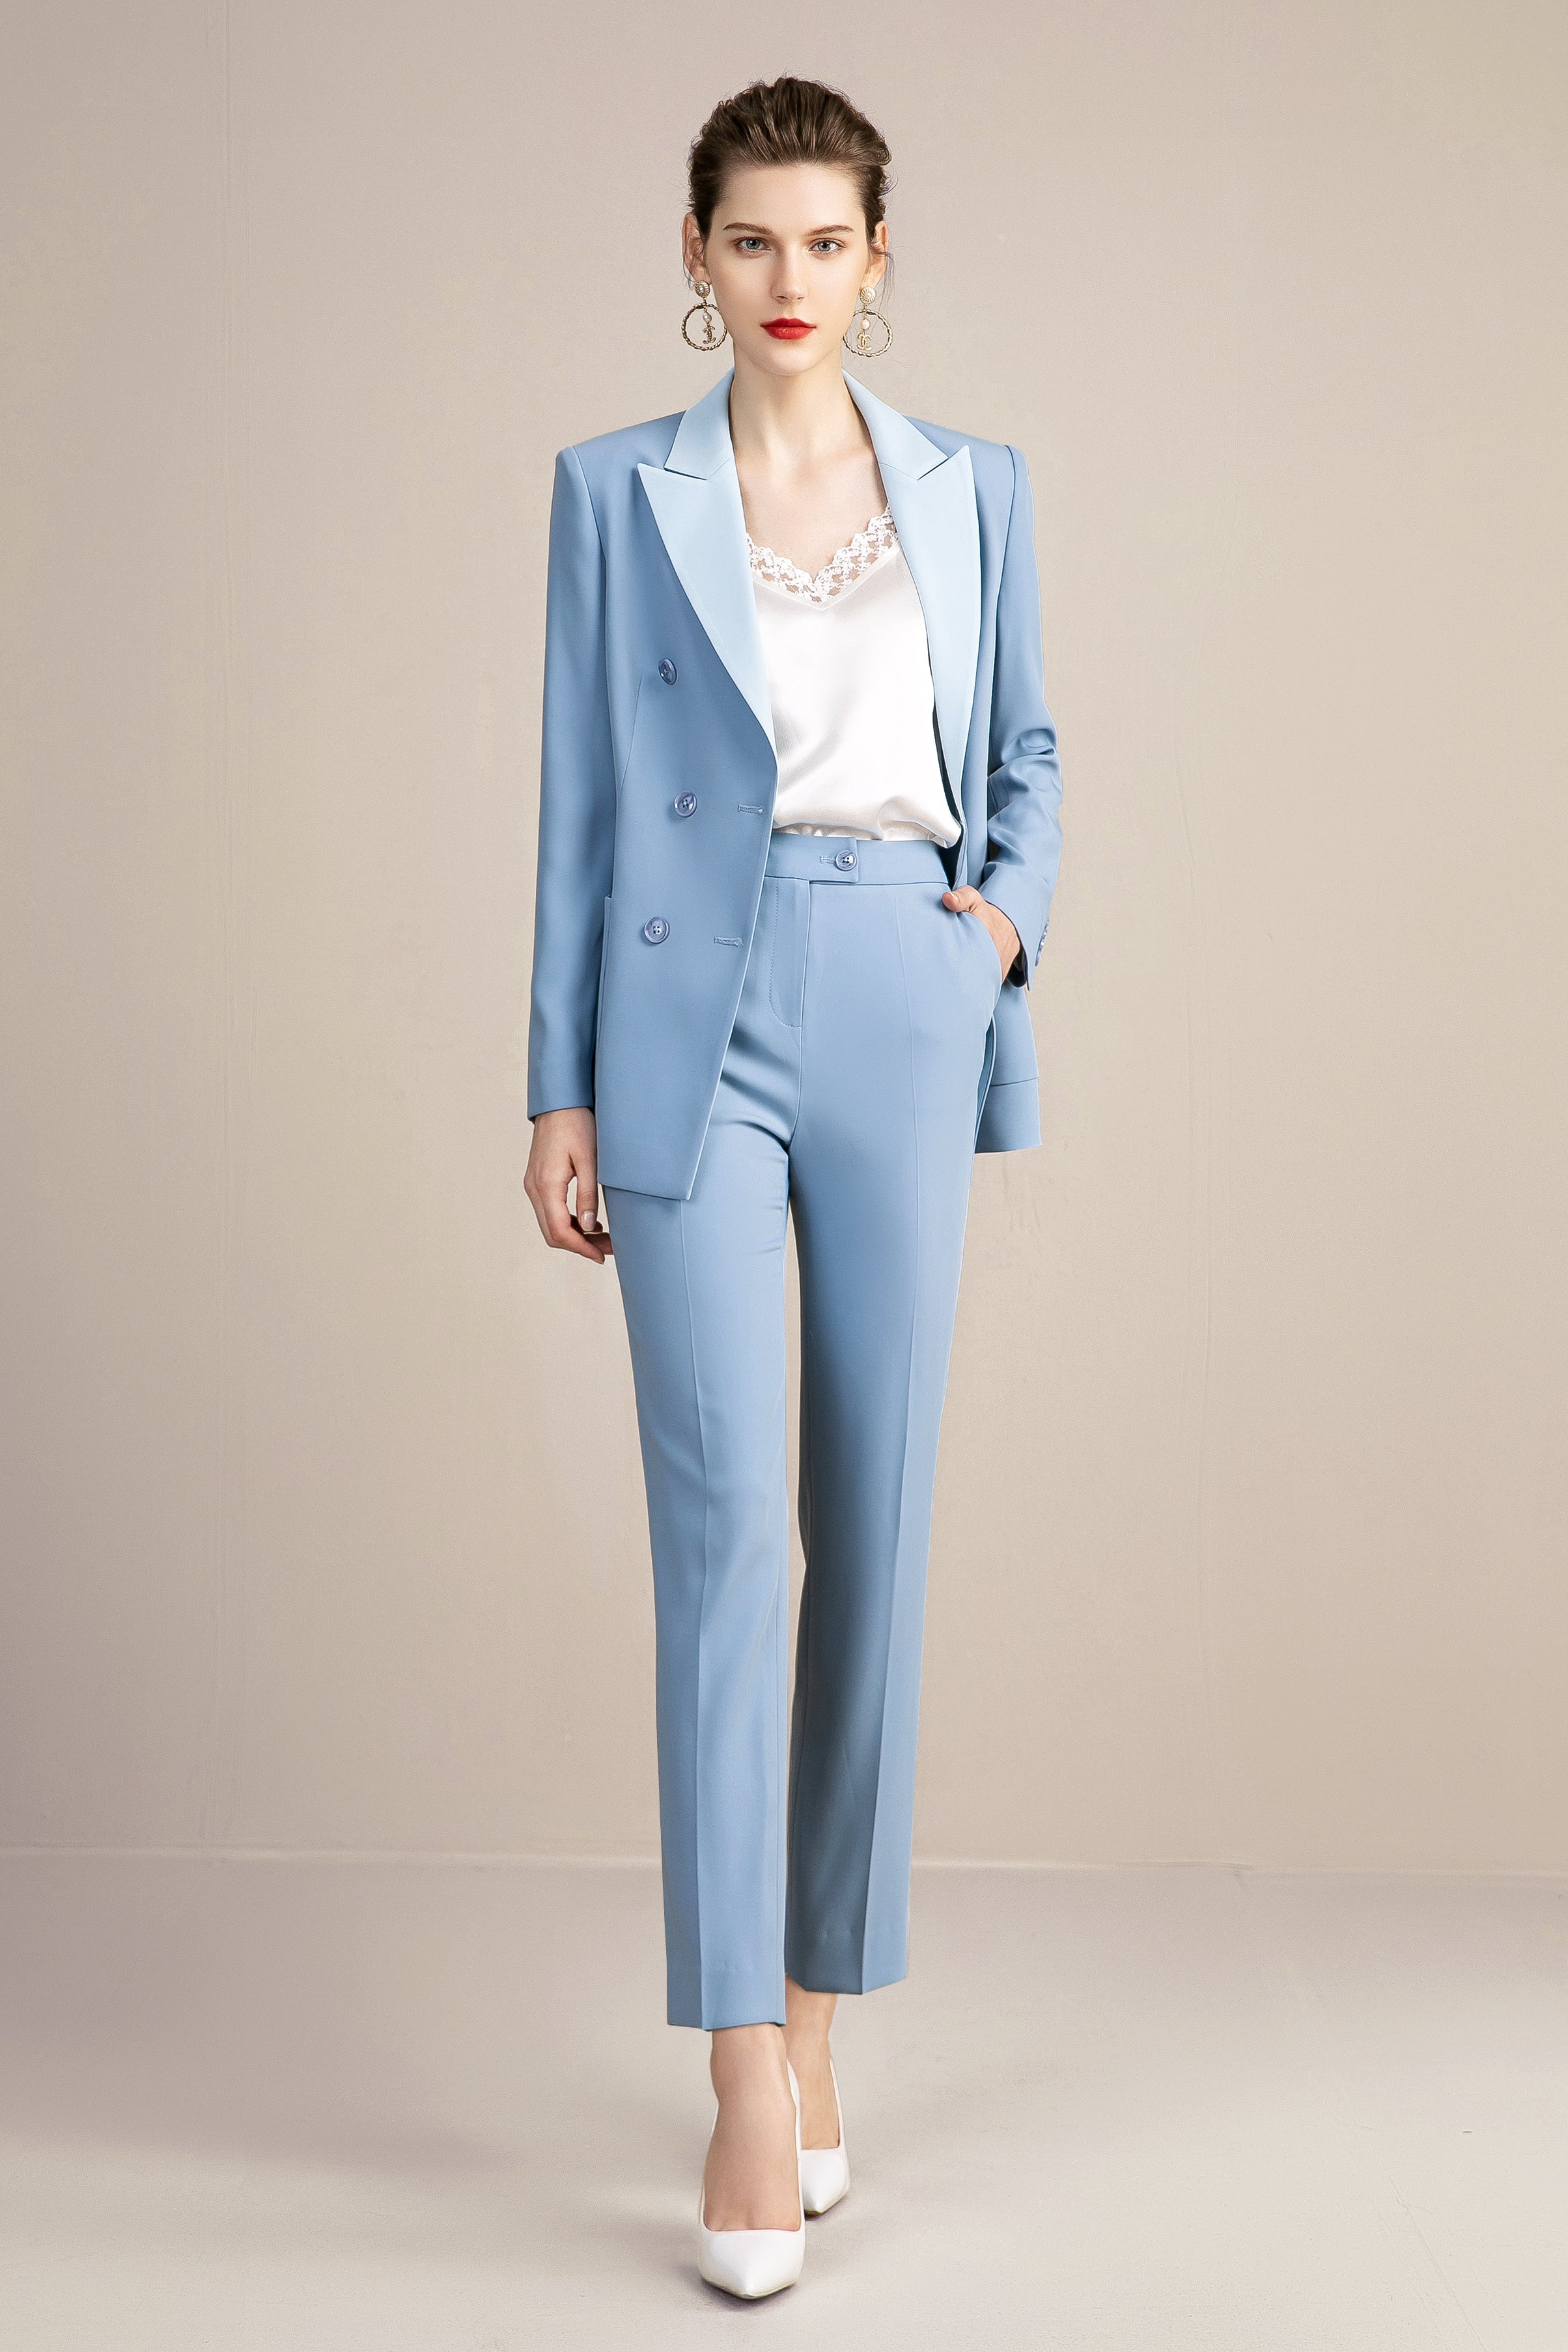 Asymmetric Navy Blue 2 Piece Pants Suits for Women, Chic Stylish Suits,  Formal Suits, Office Suits, Wedding Suits, Blue Tailored Suit Women - Etsy